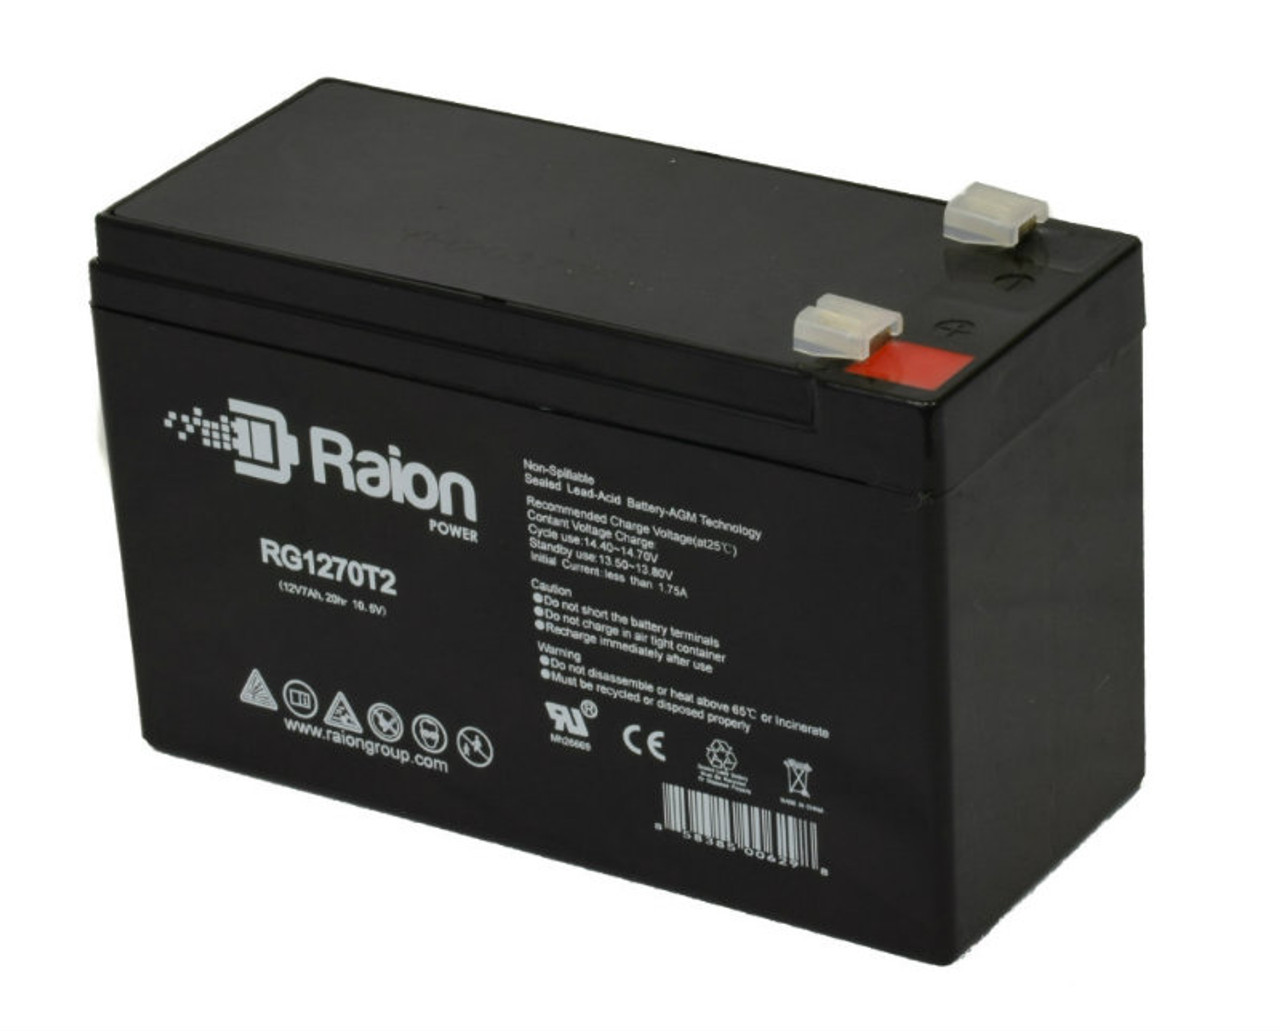 Raion Power RG1270T2 12V 7Ah AGM Battery for Arjo-Century Bravo Ceiling Lift